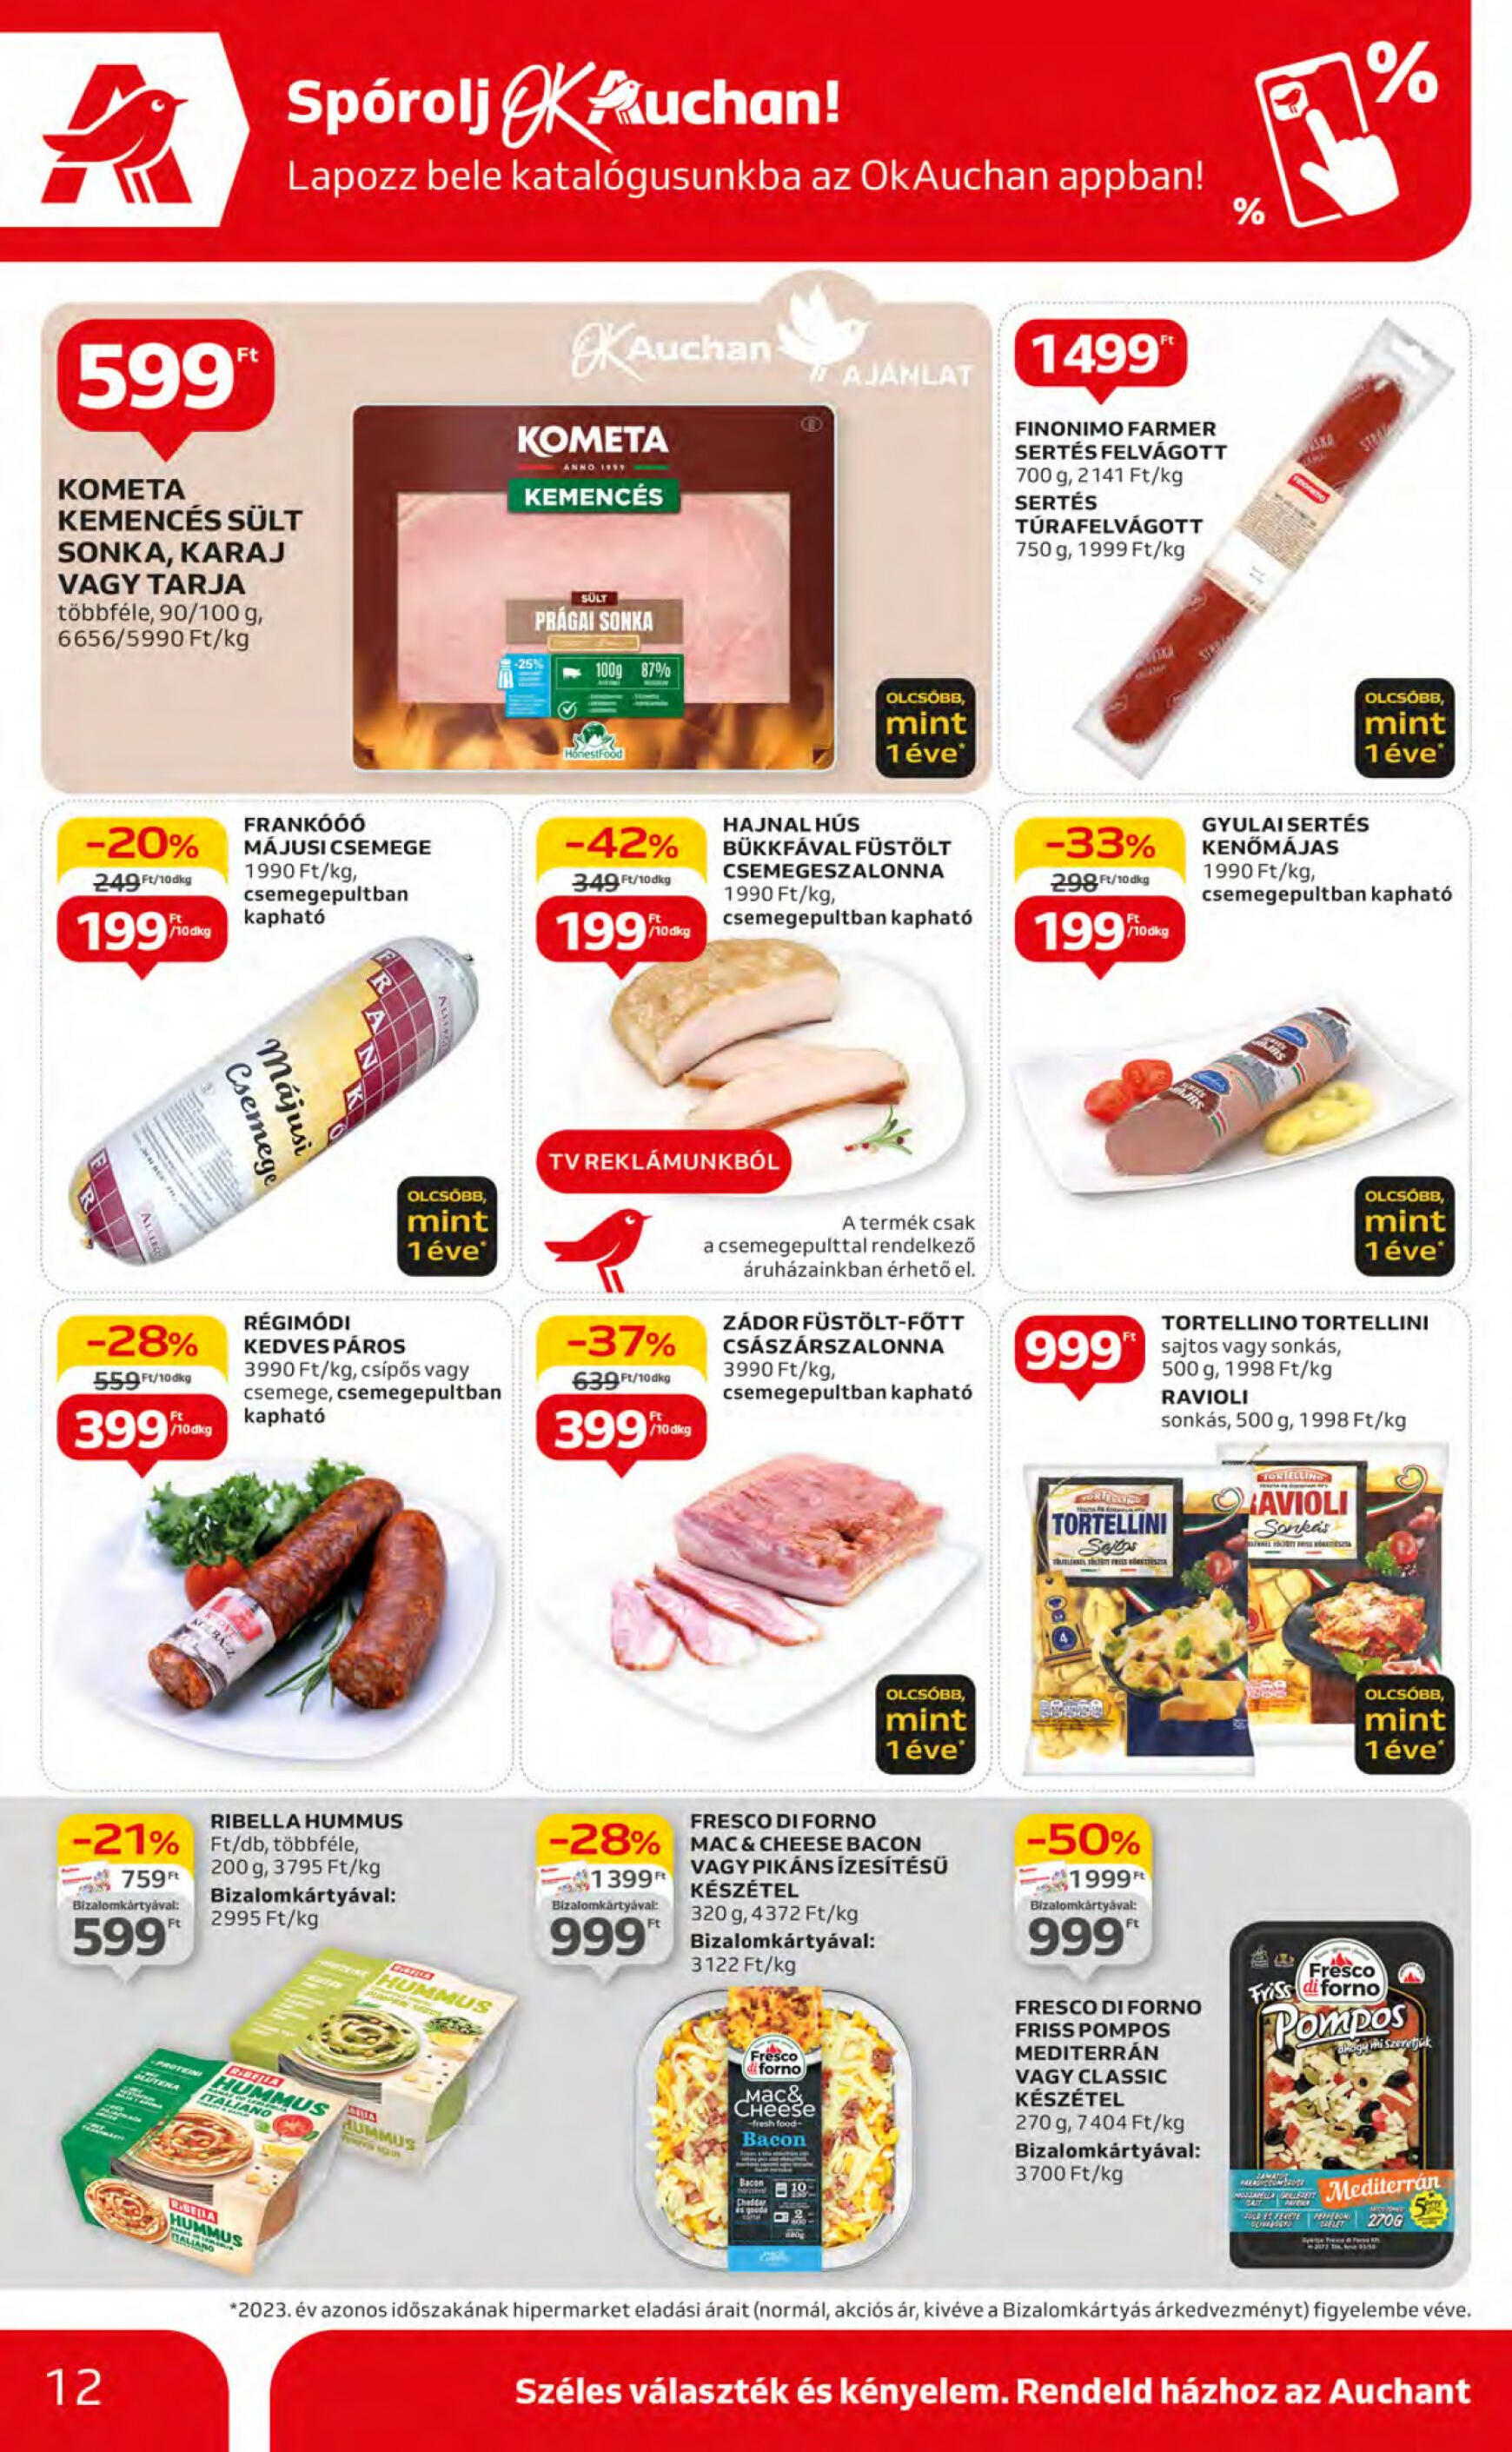 auchan - Aktuális újság Auchan 05.09. - 05.15. - page: 12